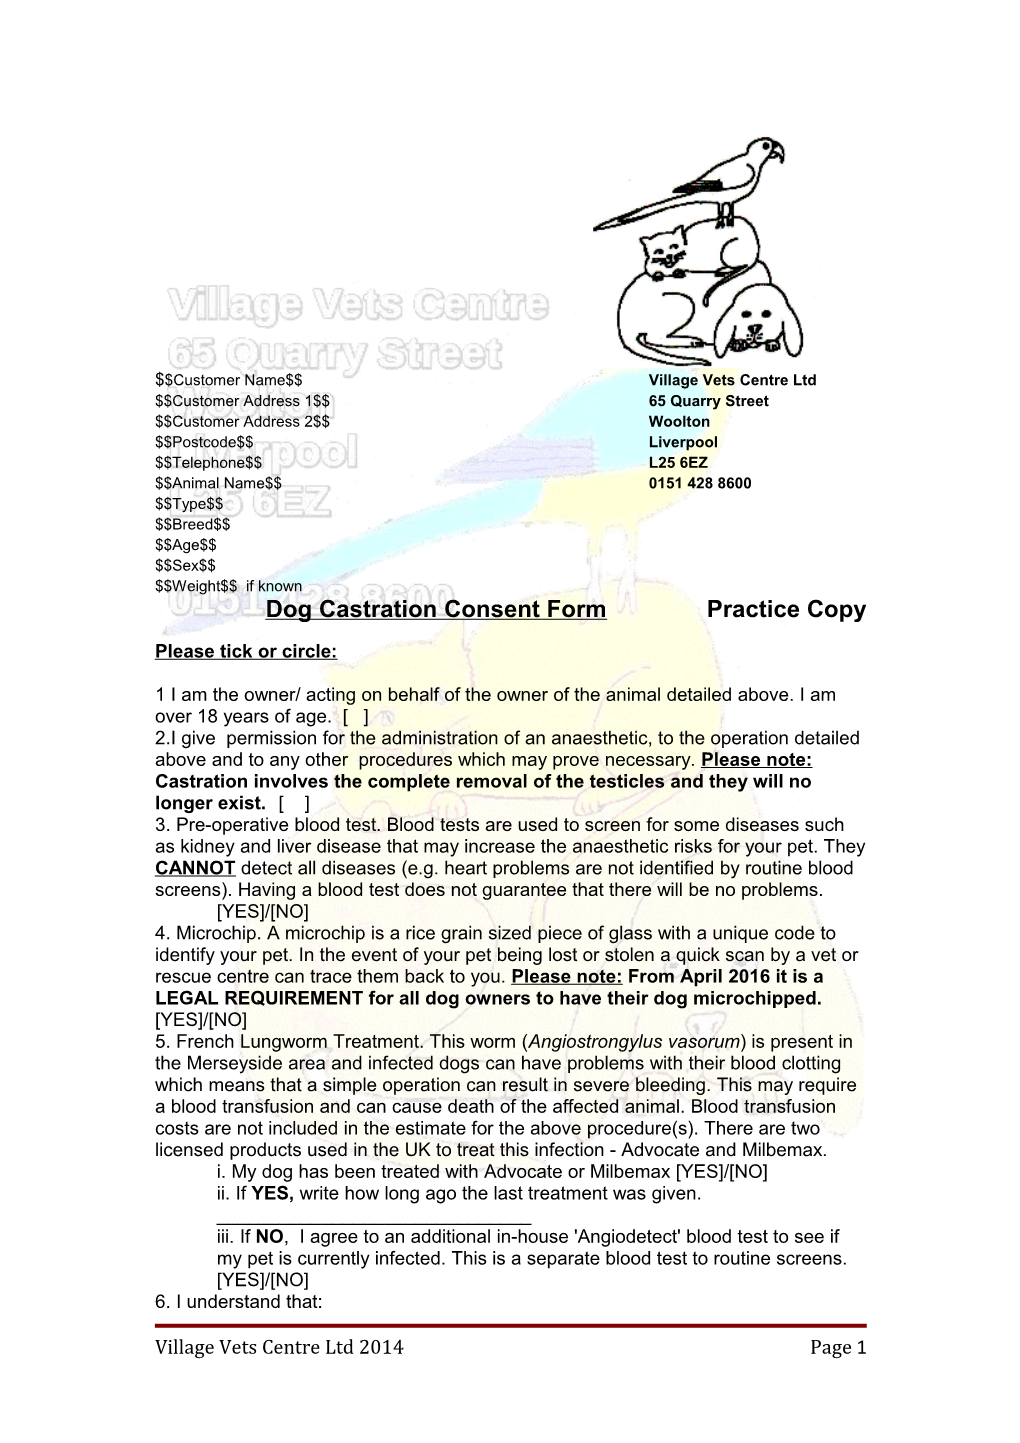 $$Customer Name$$ Village Vets Centre Ltd